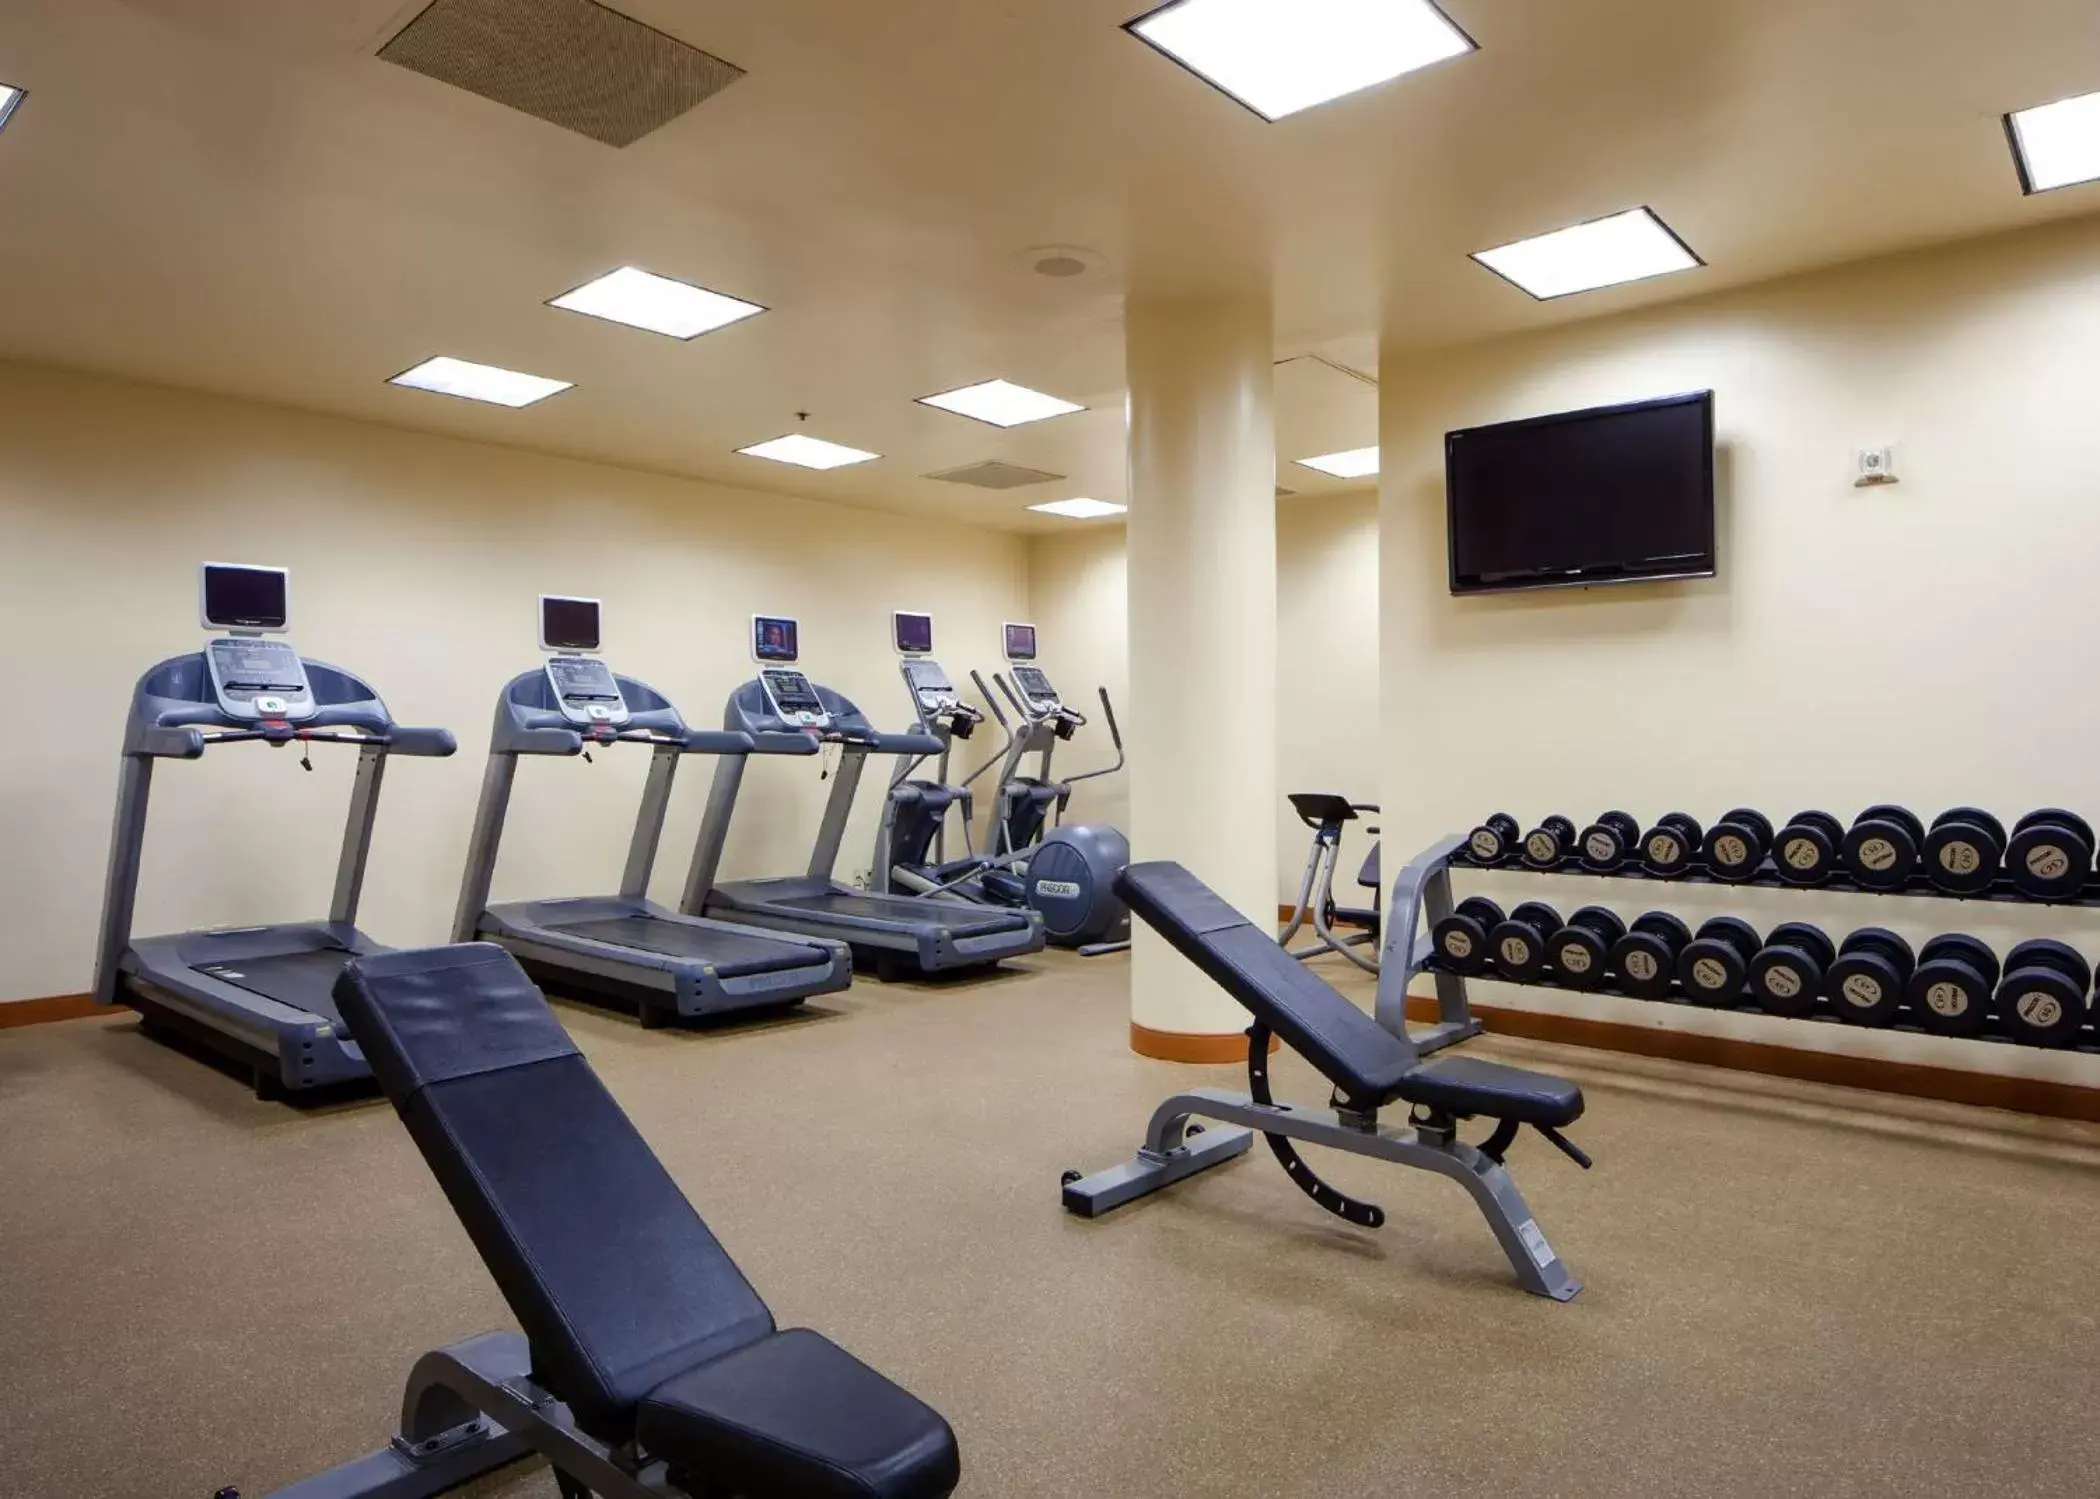 Fitness centre/facilities, Fitness Center/Facilities in Embassy Suites San Antonio Airport